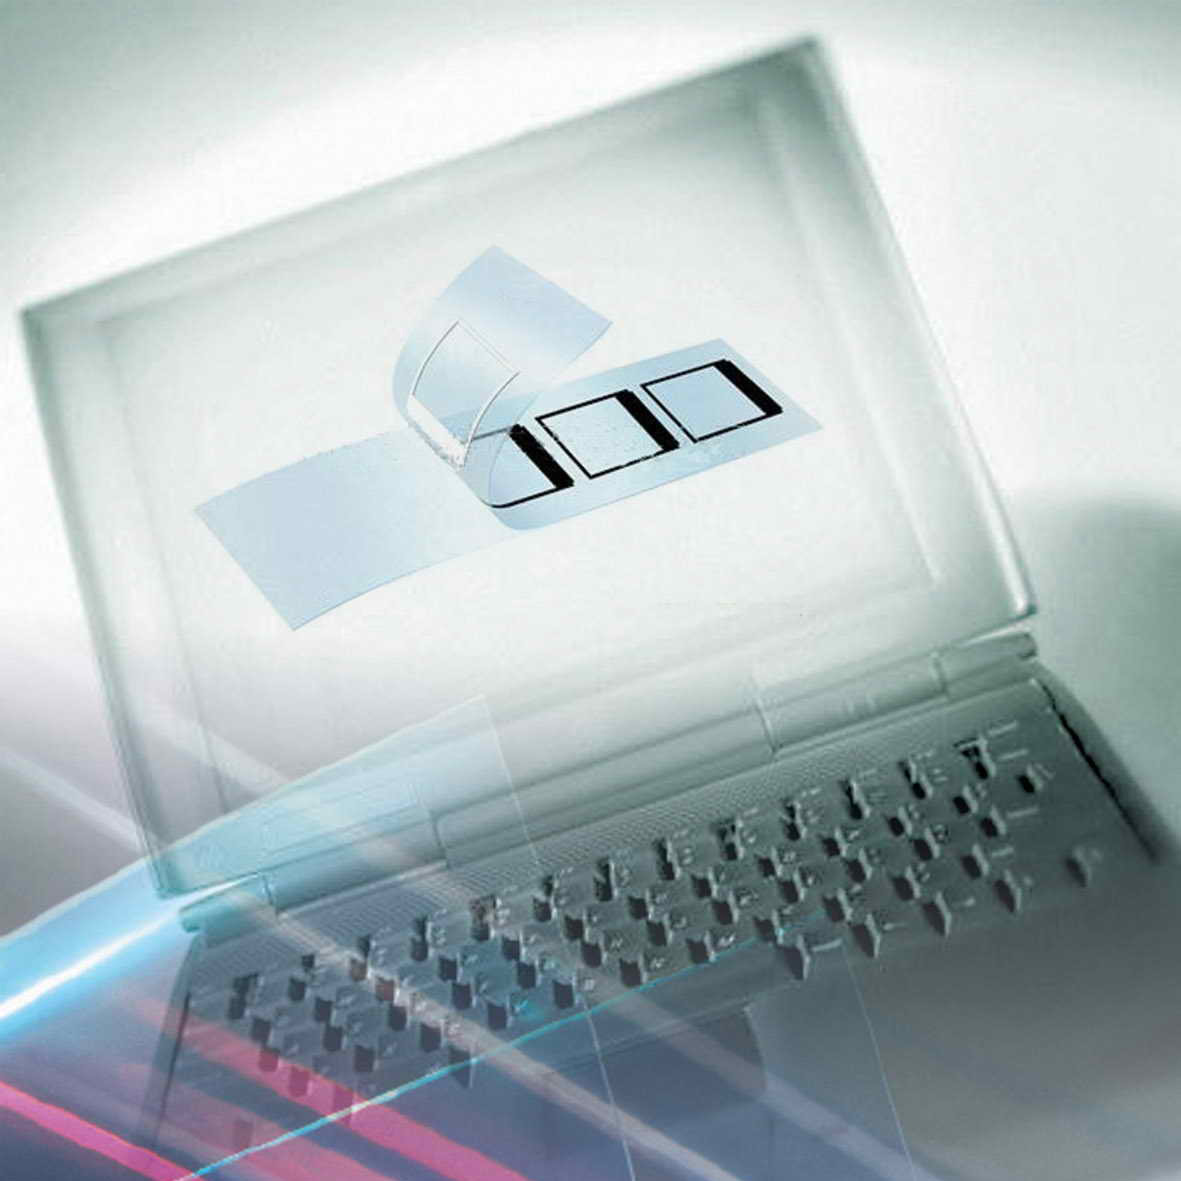  Release Film for Process Materials (LCD, Semi-Conductor) (Sortie du film pour le traitement de matières (LCD, Semi-Conductor))